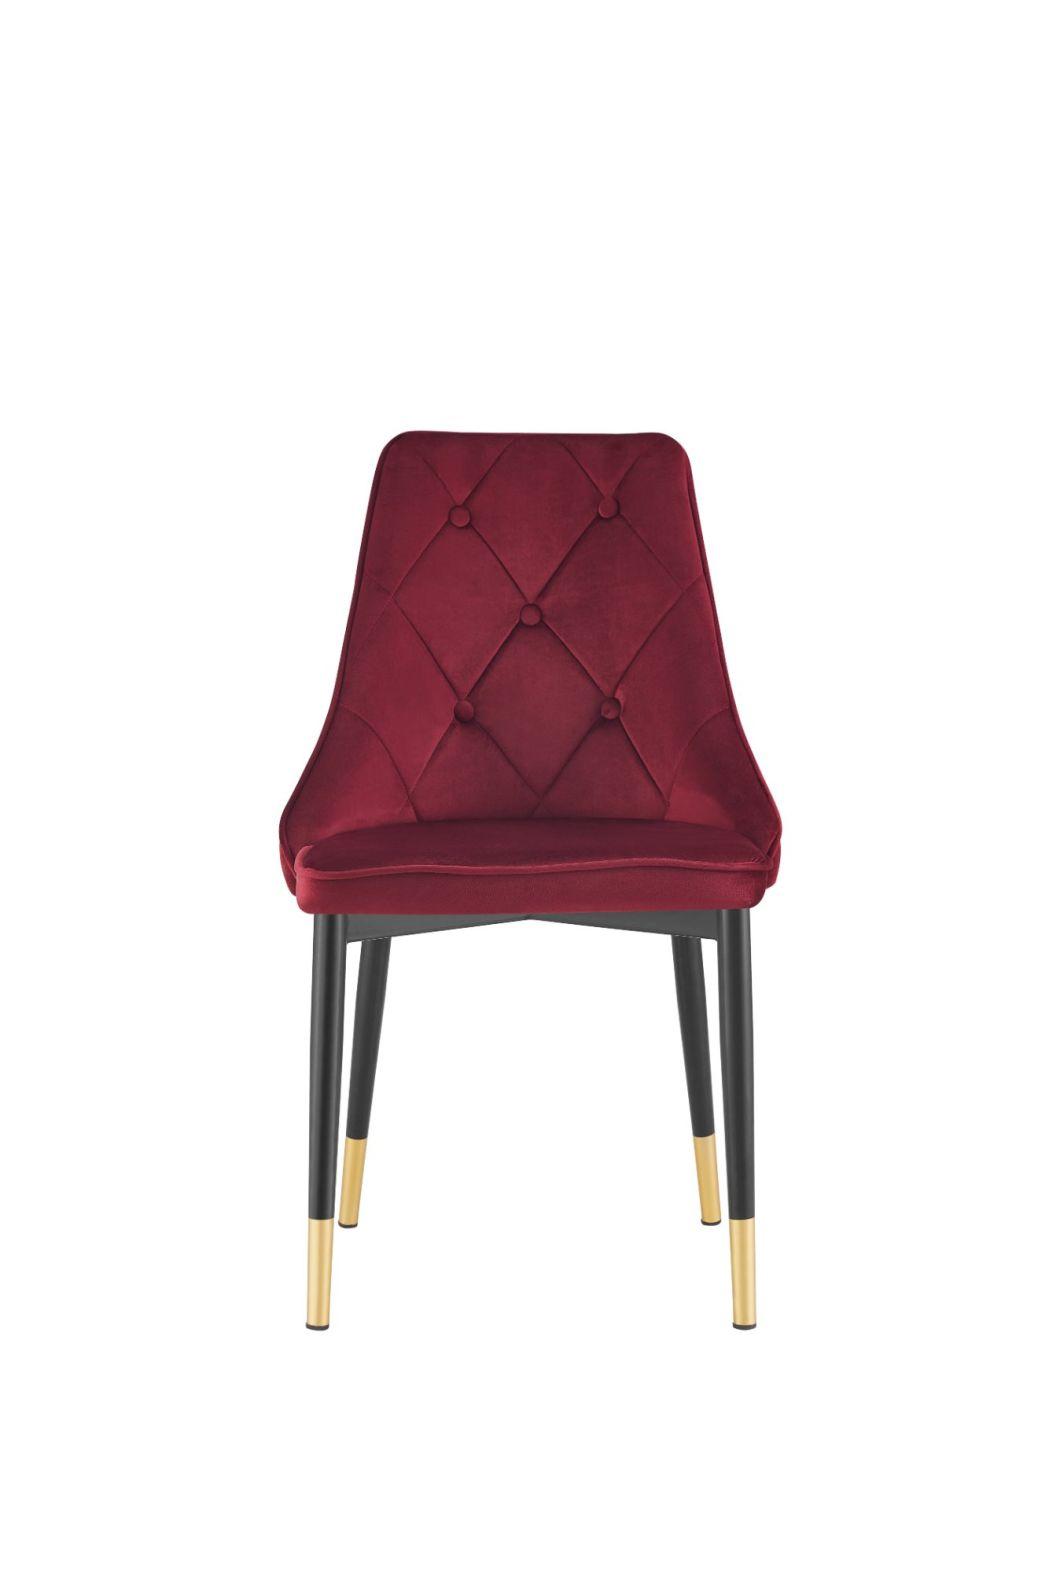 Velvet Armless OEM Good Selling Home Furniture Chair Dining Chair